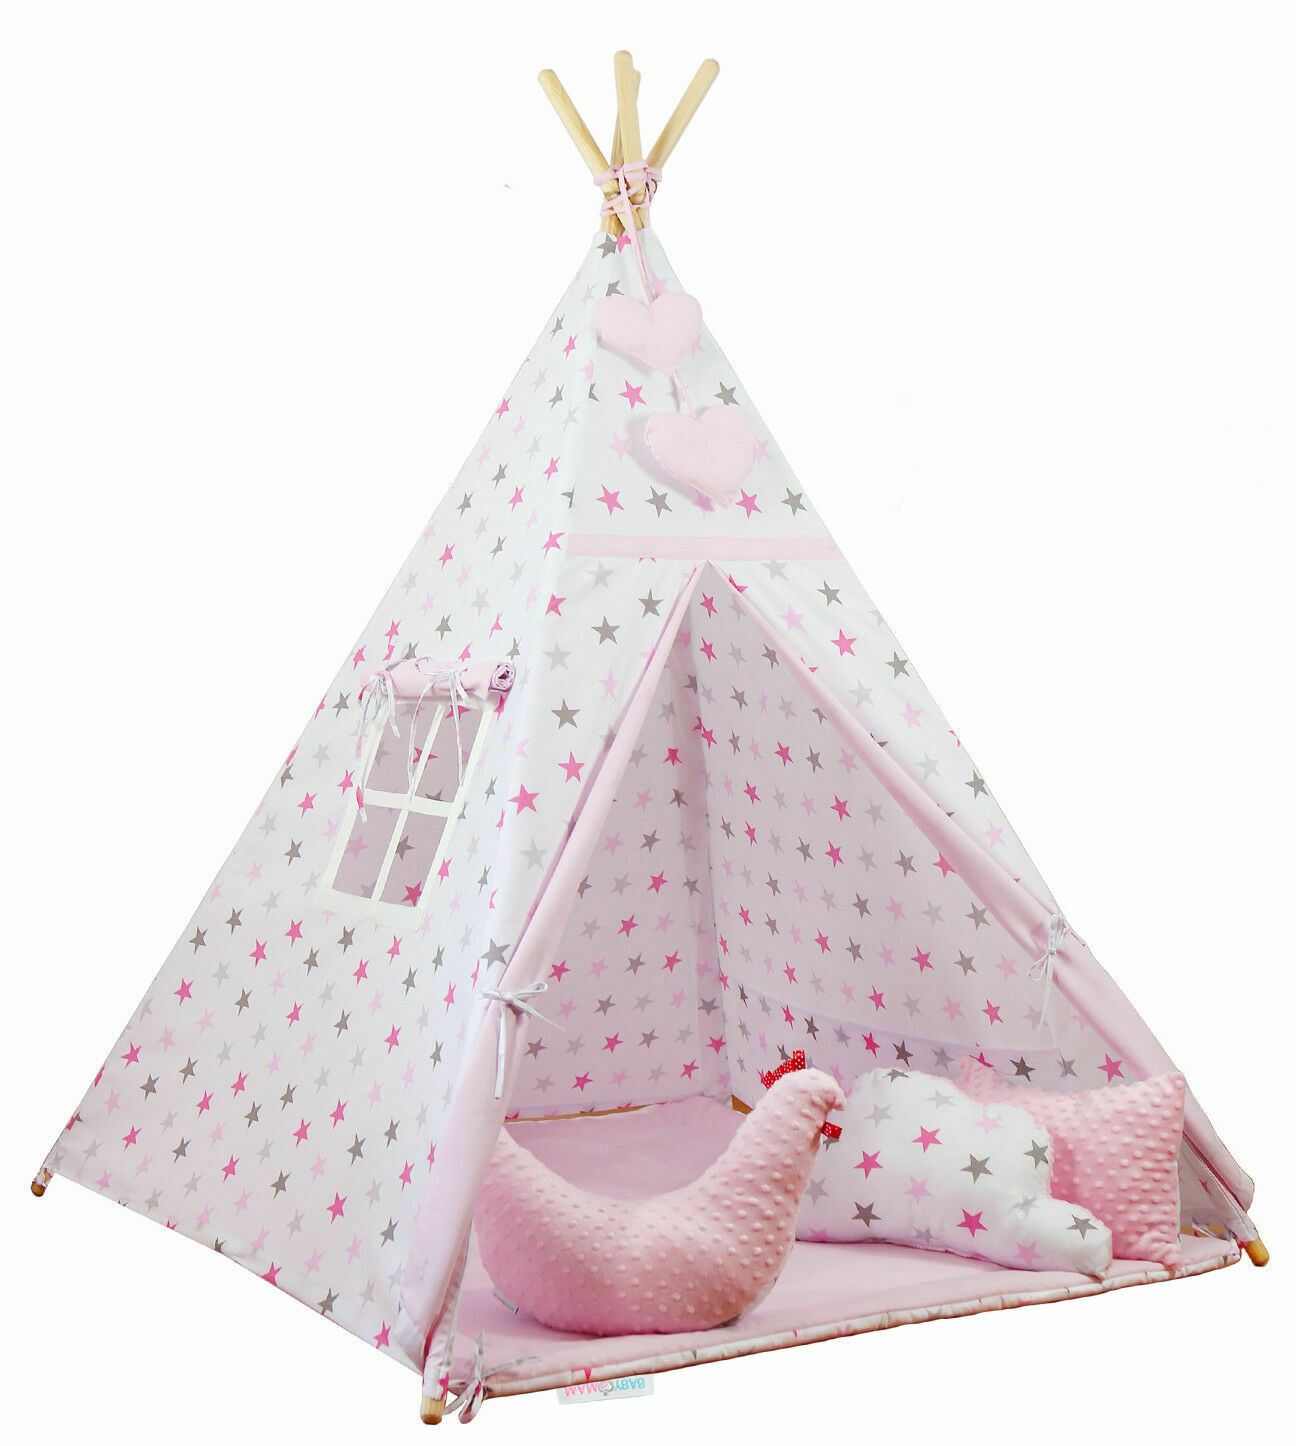 Teepee Wigwam Indoor Outdoor Kids Playhouse Tent With Three Cushions Star Dreams